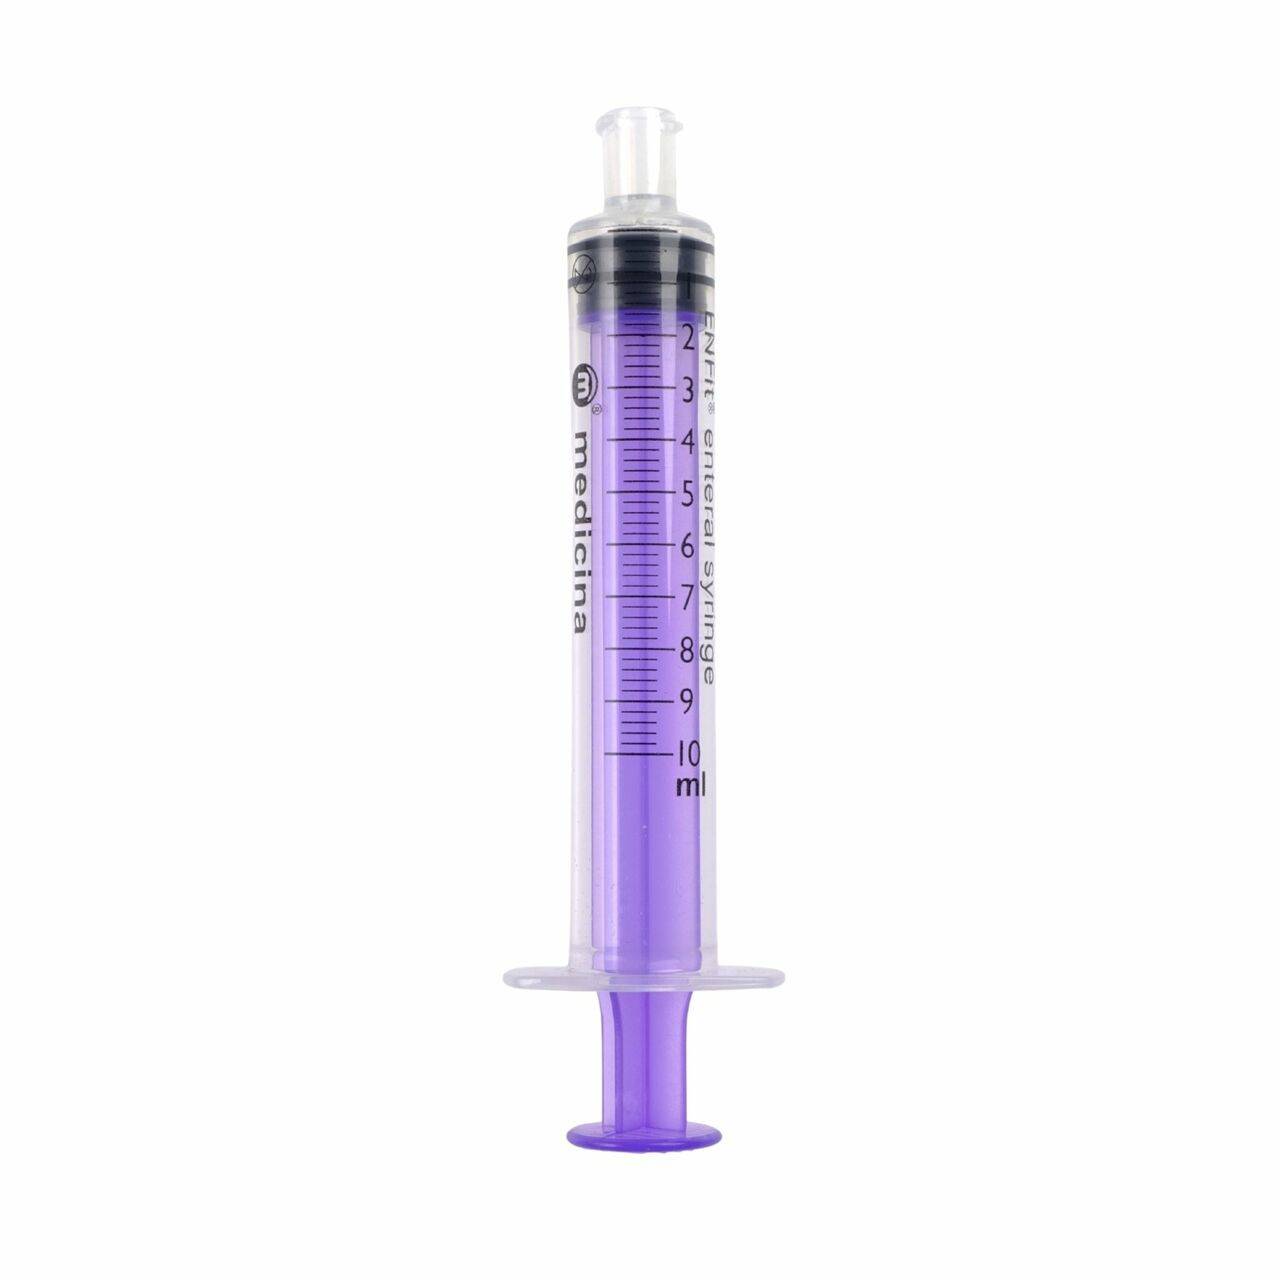 10ml ENFIT Medicina Syringe - UKMEDI